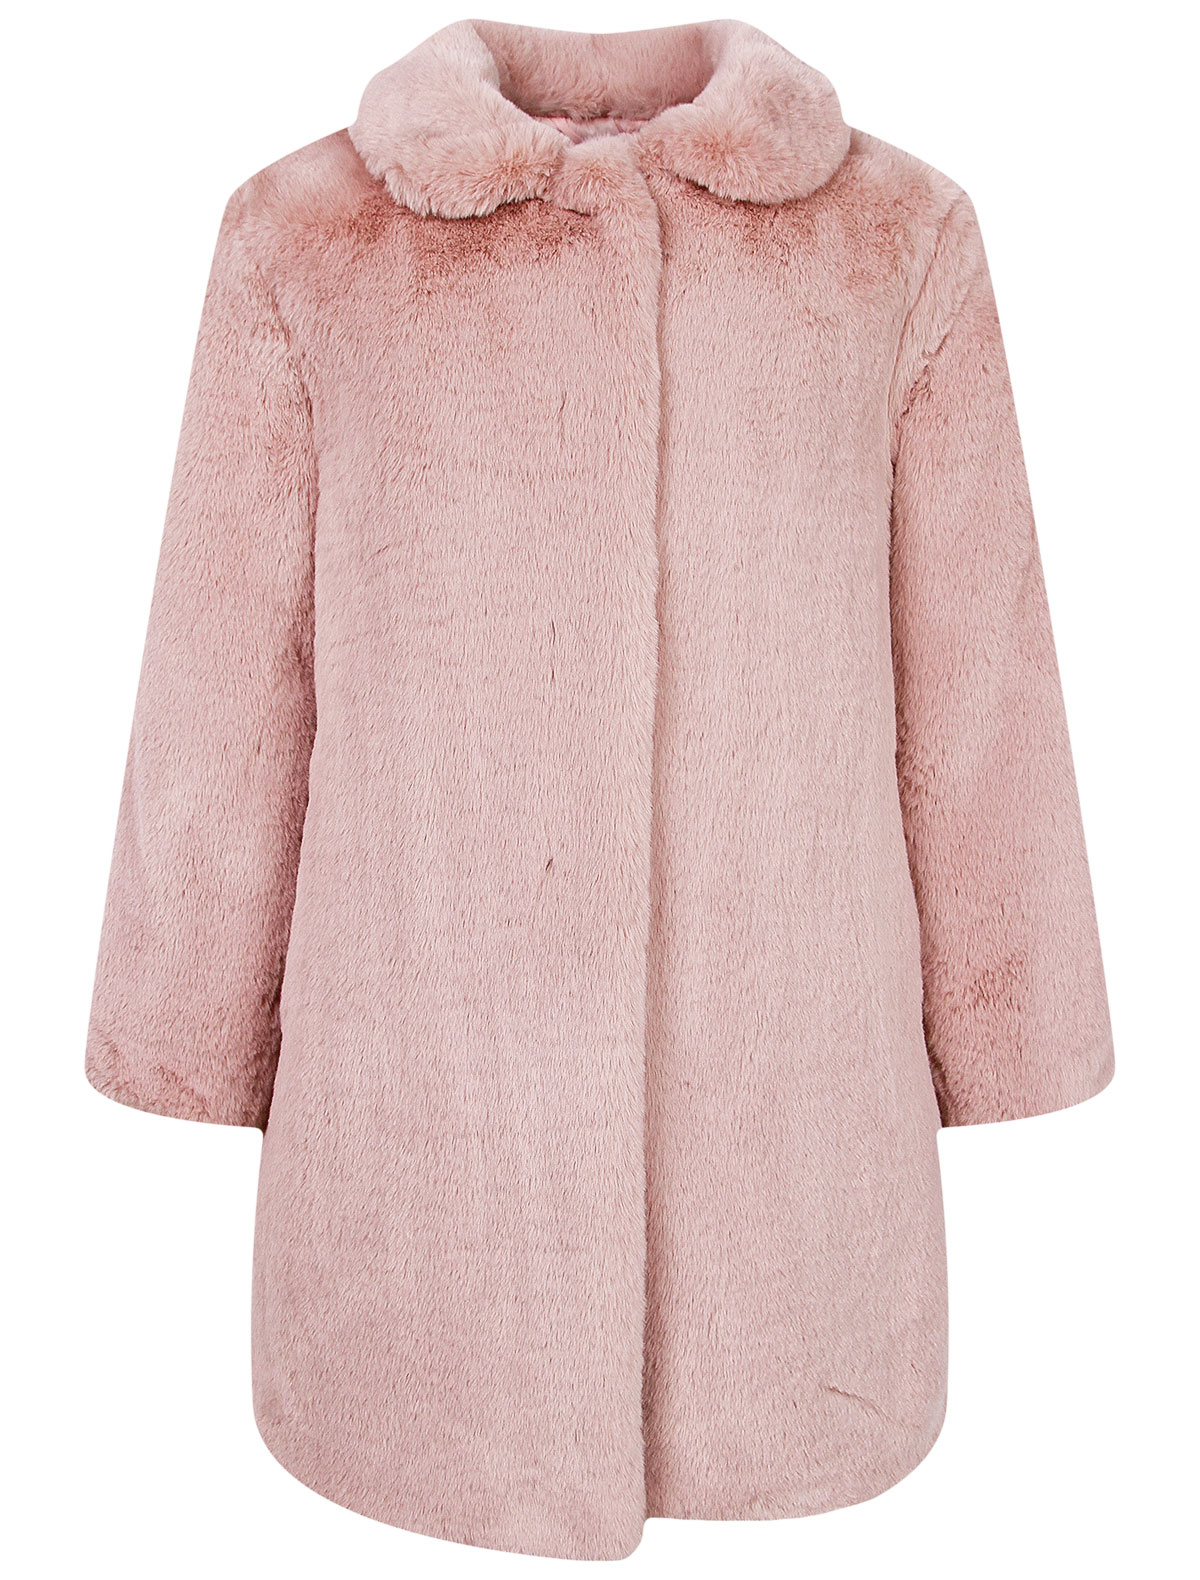 Пальто Il Gufo 2334380, цвет розовый, размер 7 1124509180441 - фото 1